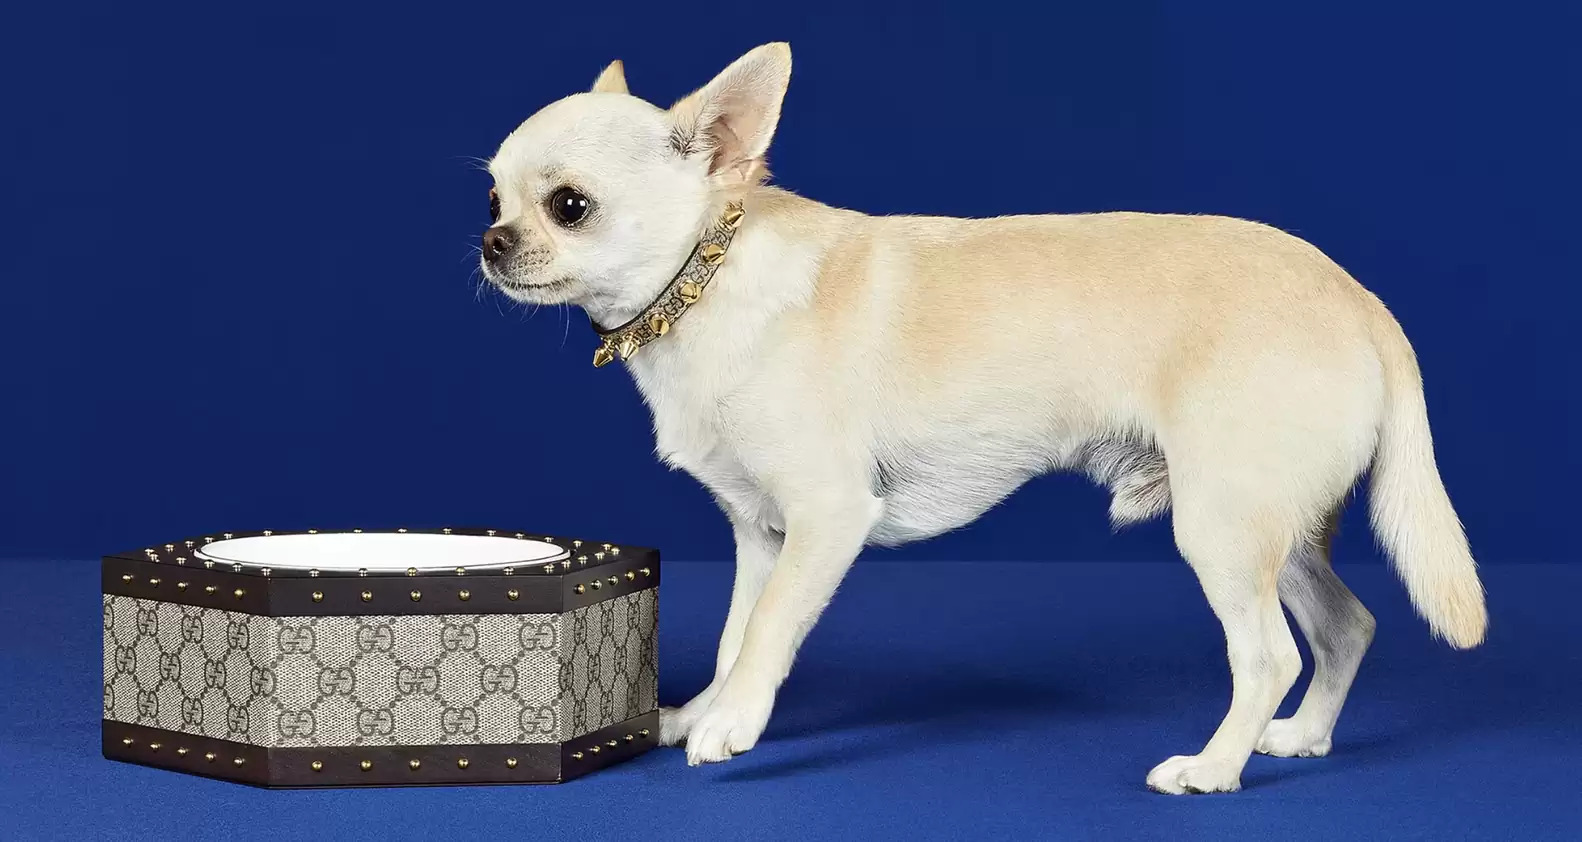 Meet Gucci #dog #friendship #chow